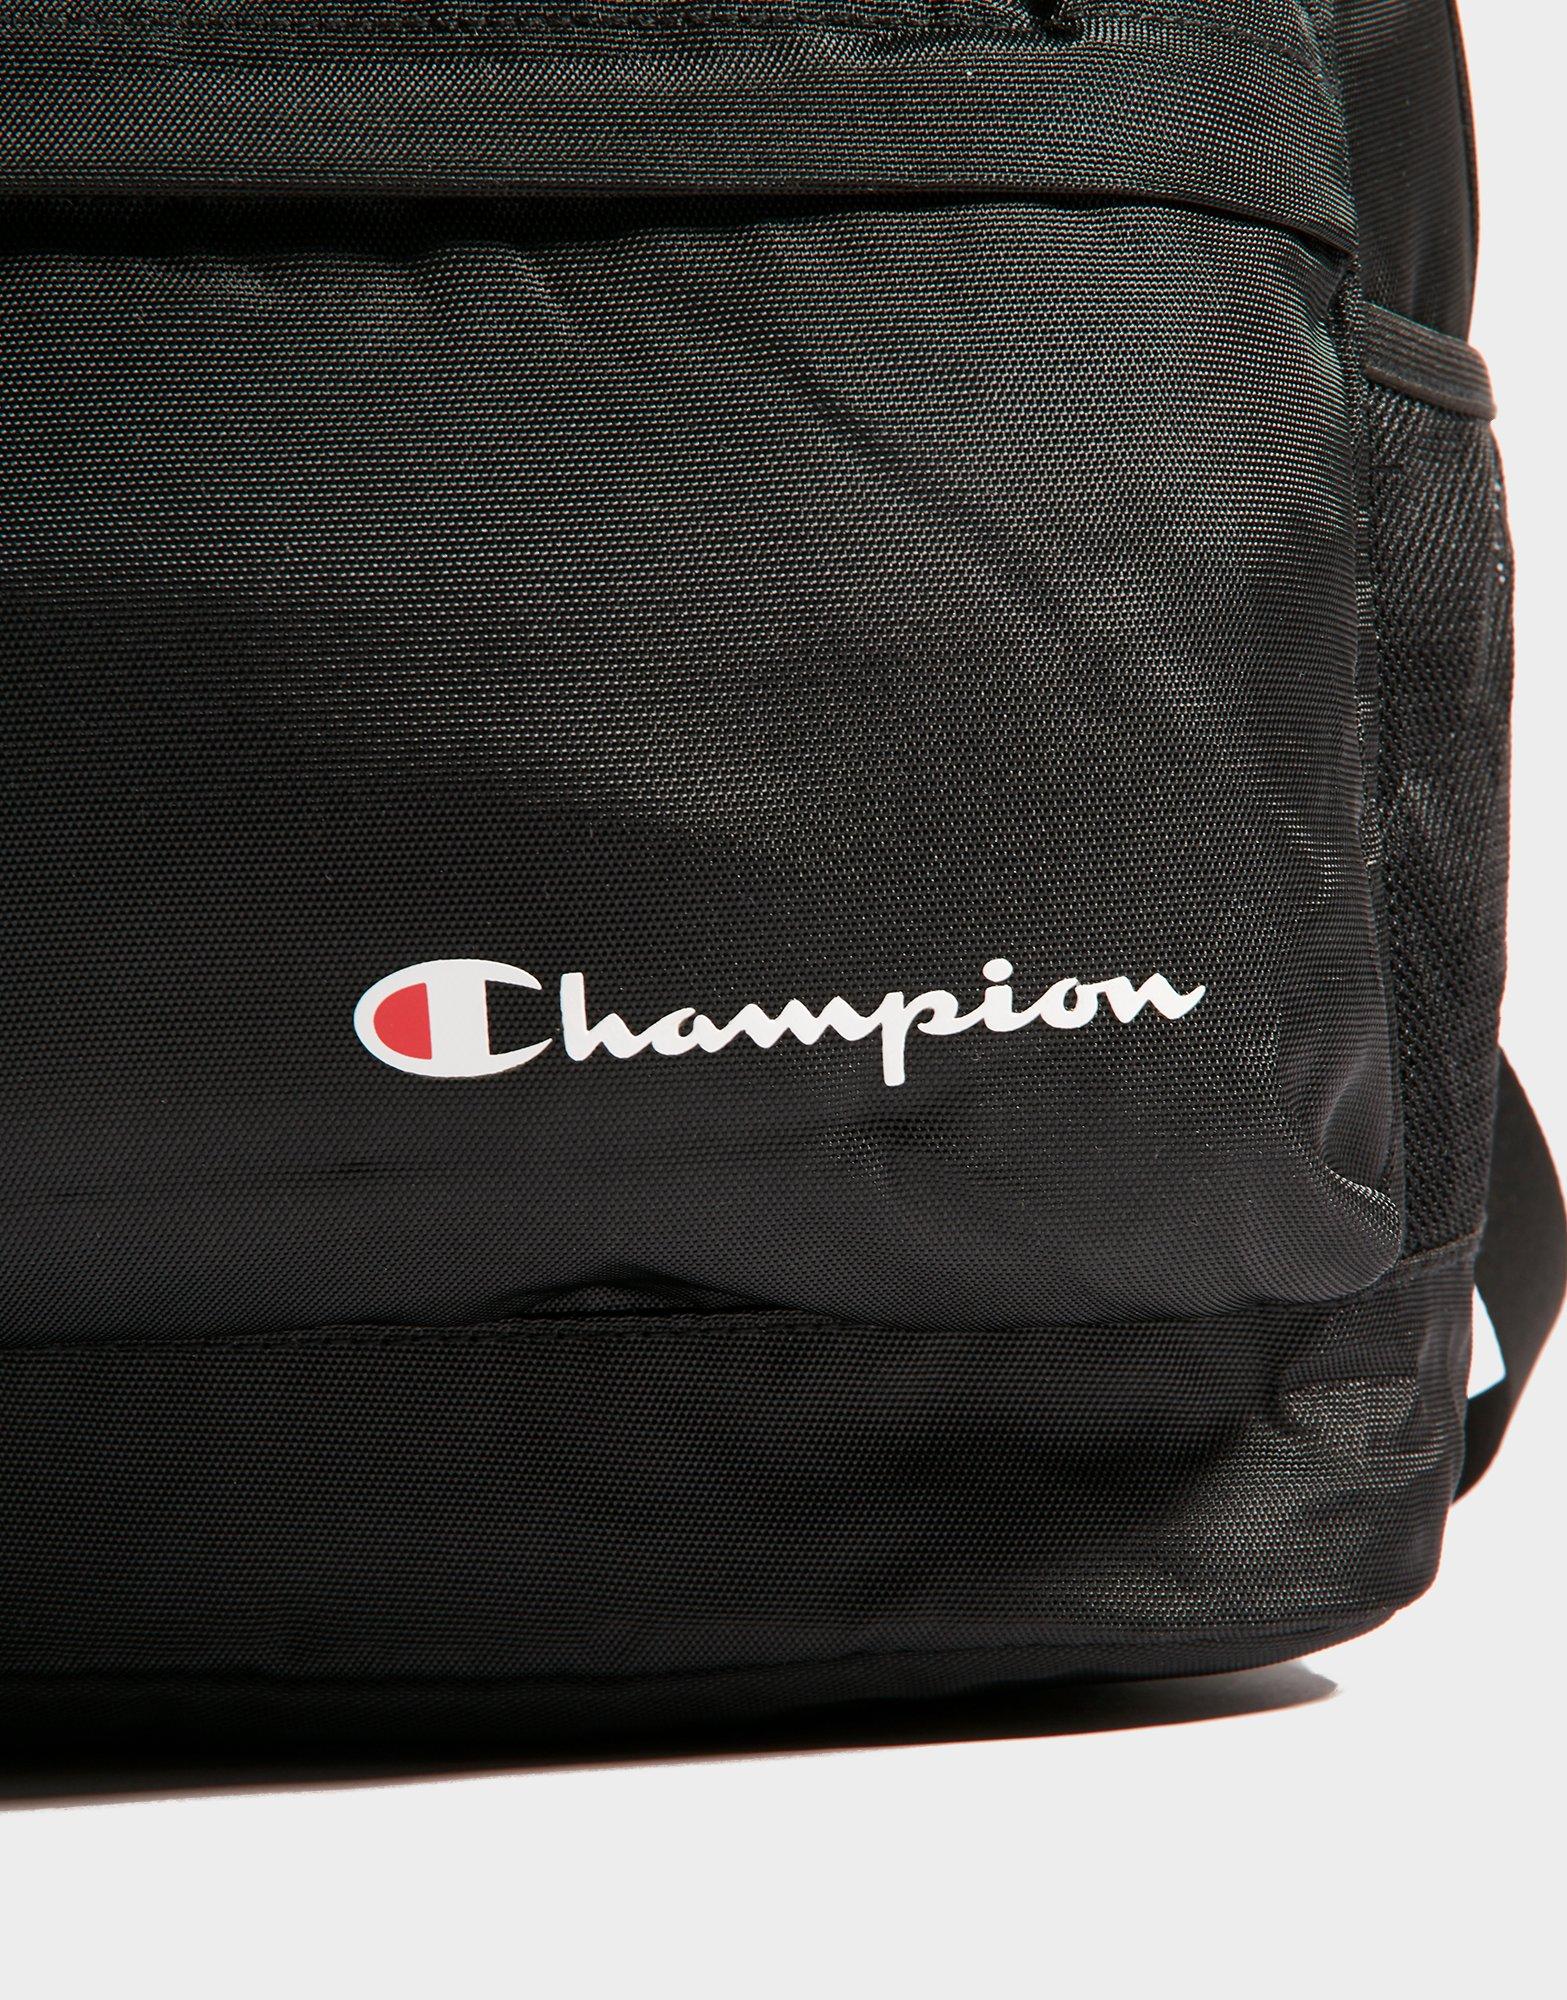 champion backpack jd